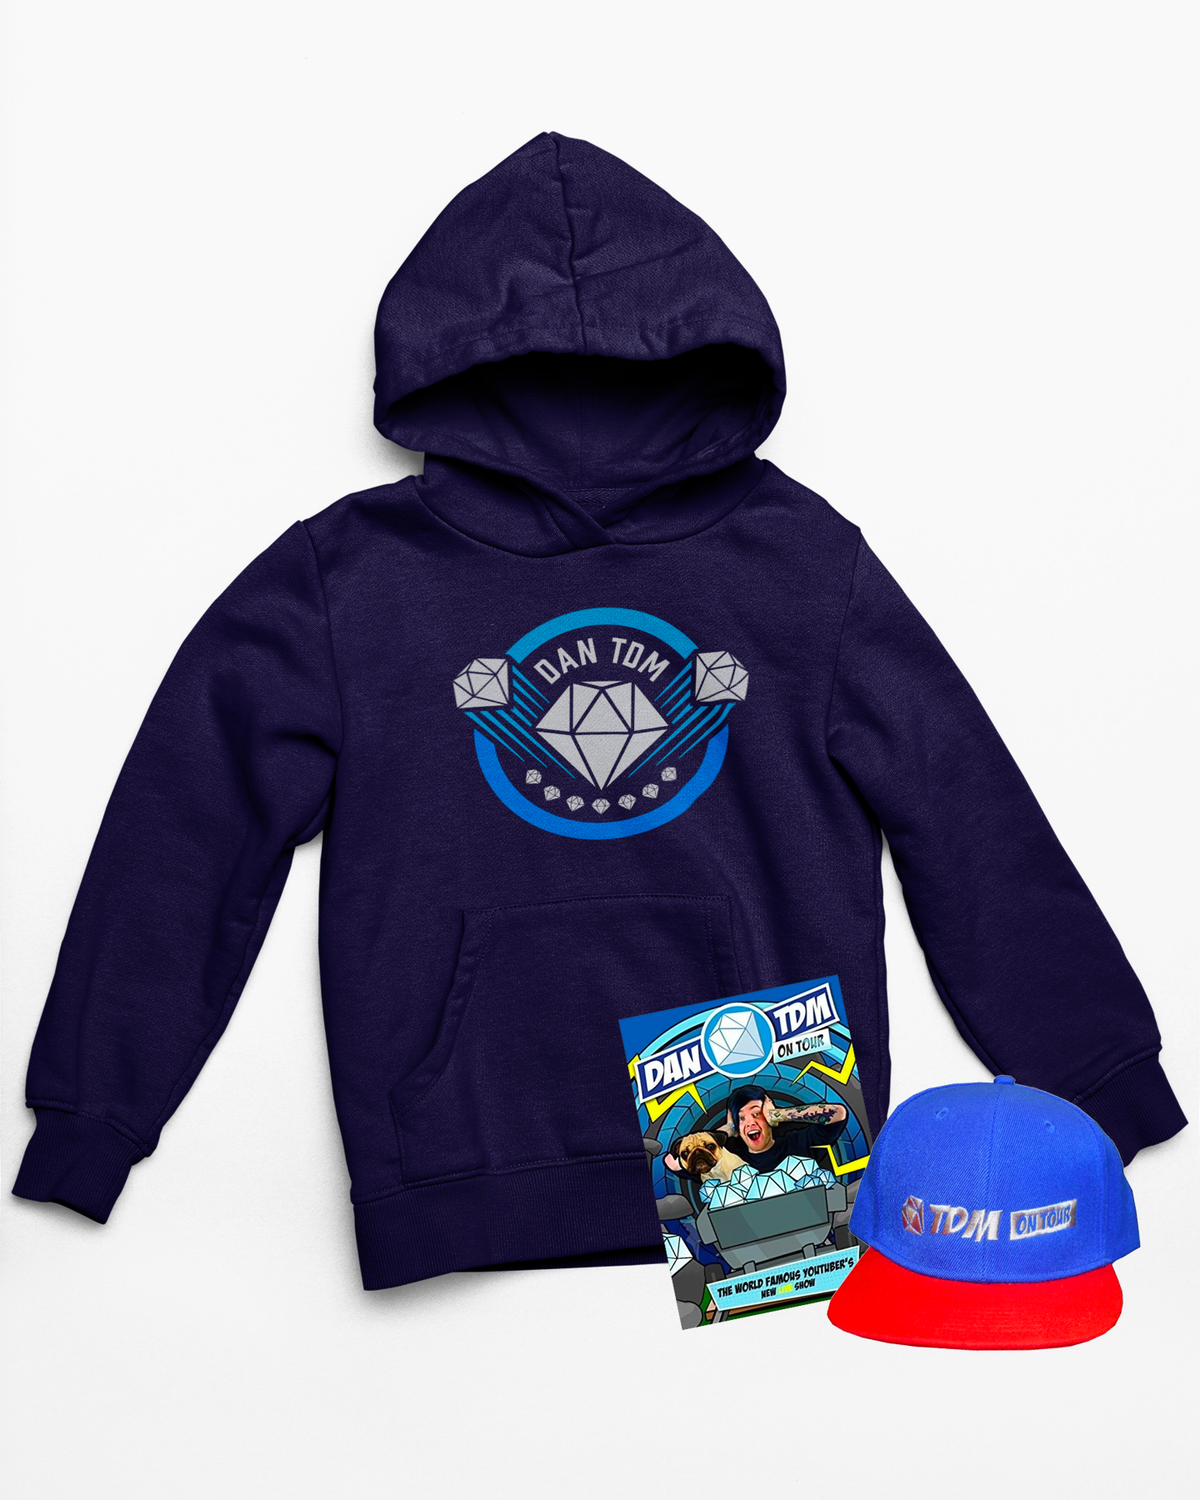 Dan TDM Diamonds Legacy Hooded Sweatshirt PLUS Free Cap and DVD with Purchase